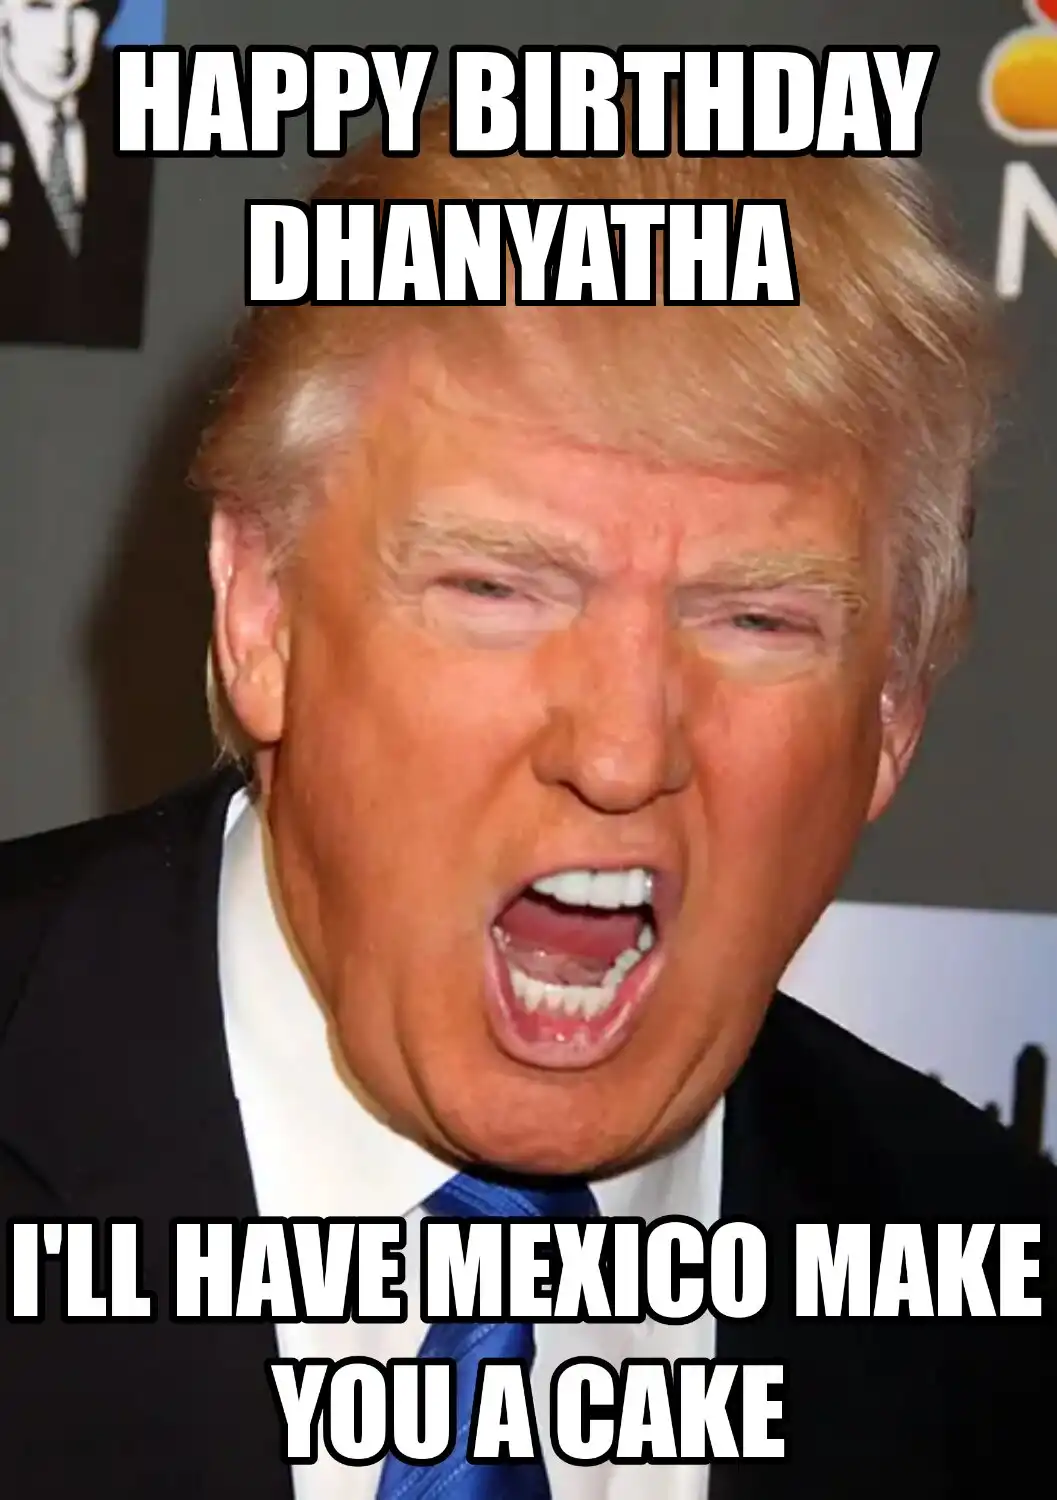 Happy Birthday Dhanyatha Mexico Make You A Cake Meme